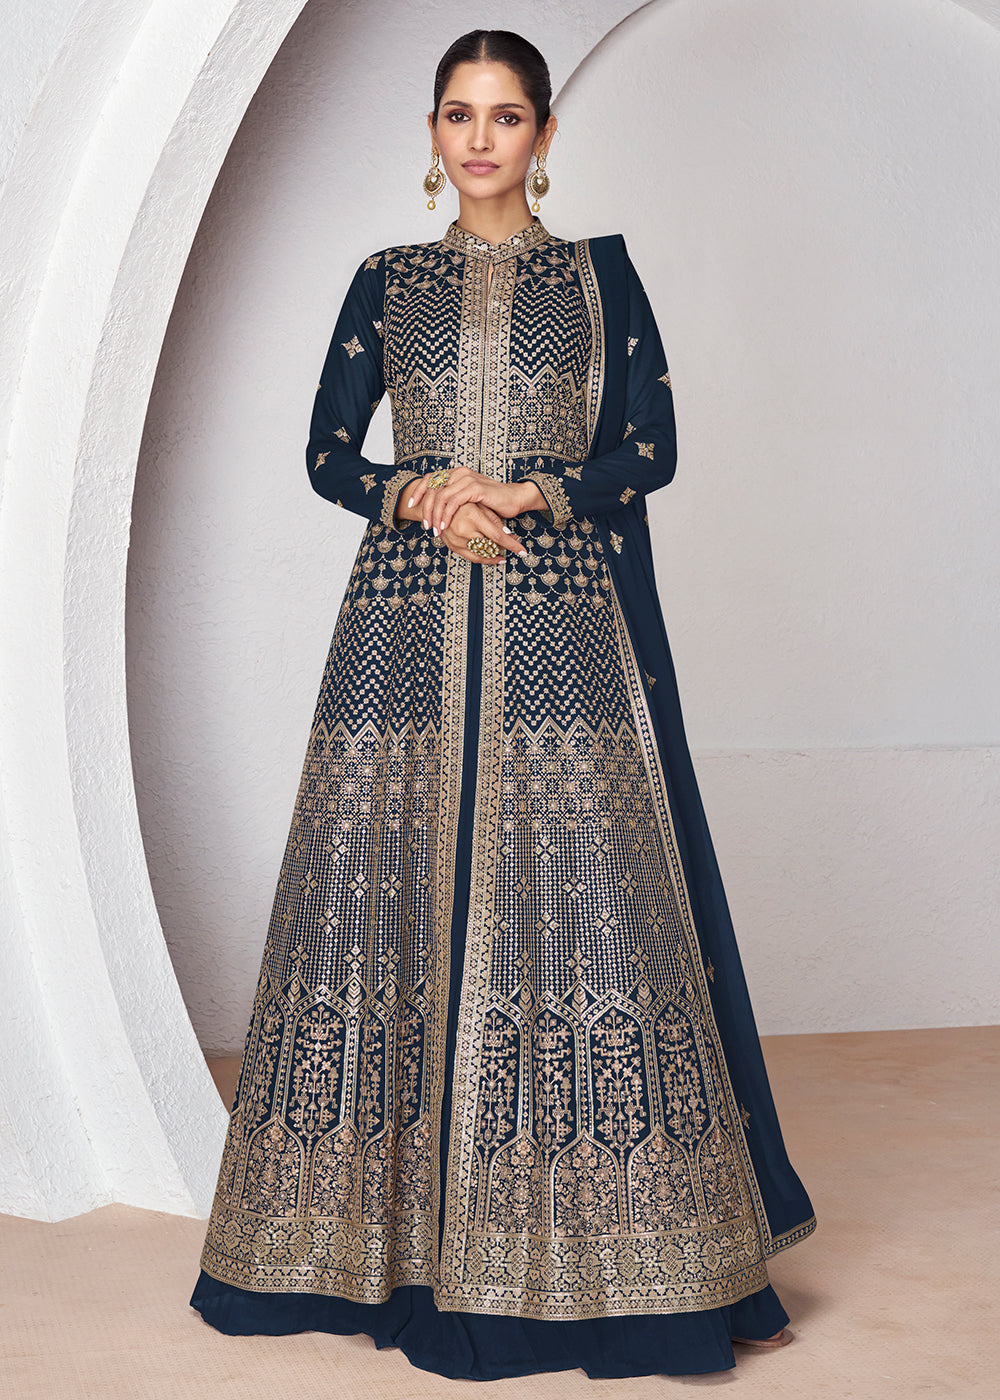 Buy Now Wedding Wear Prussian Blue Lehenga Skirt Anarkali Suit Online in USA, UK, Australia, New Zealand, Canada & Worldwide at Empress Clothing.